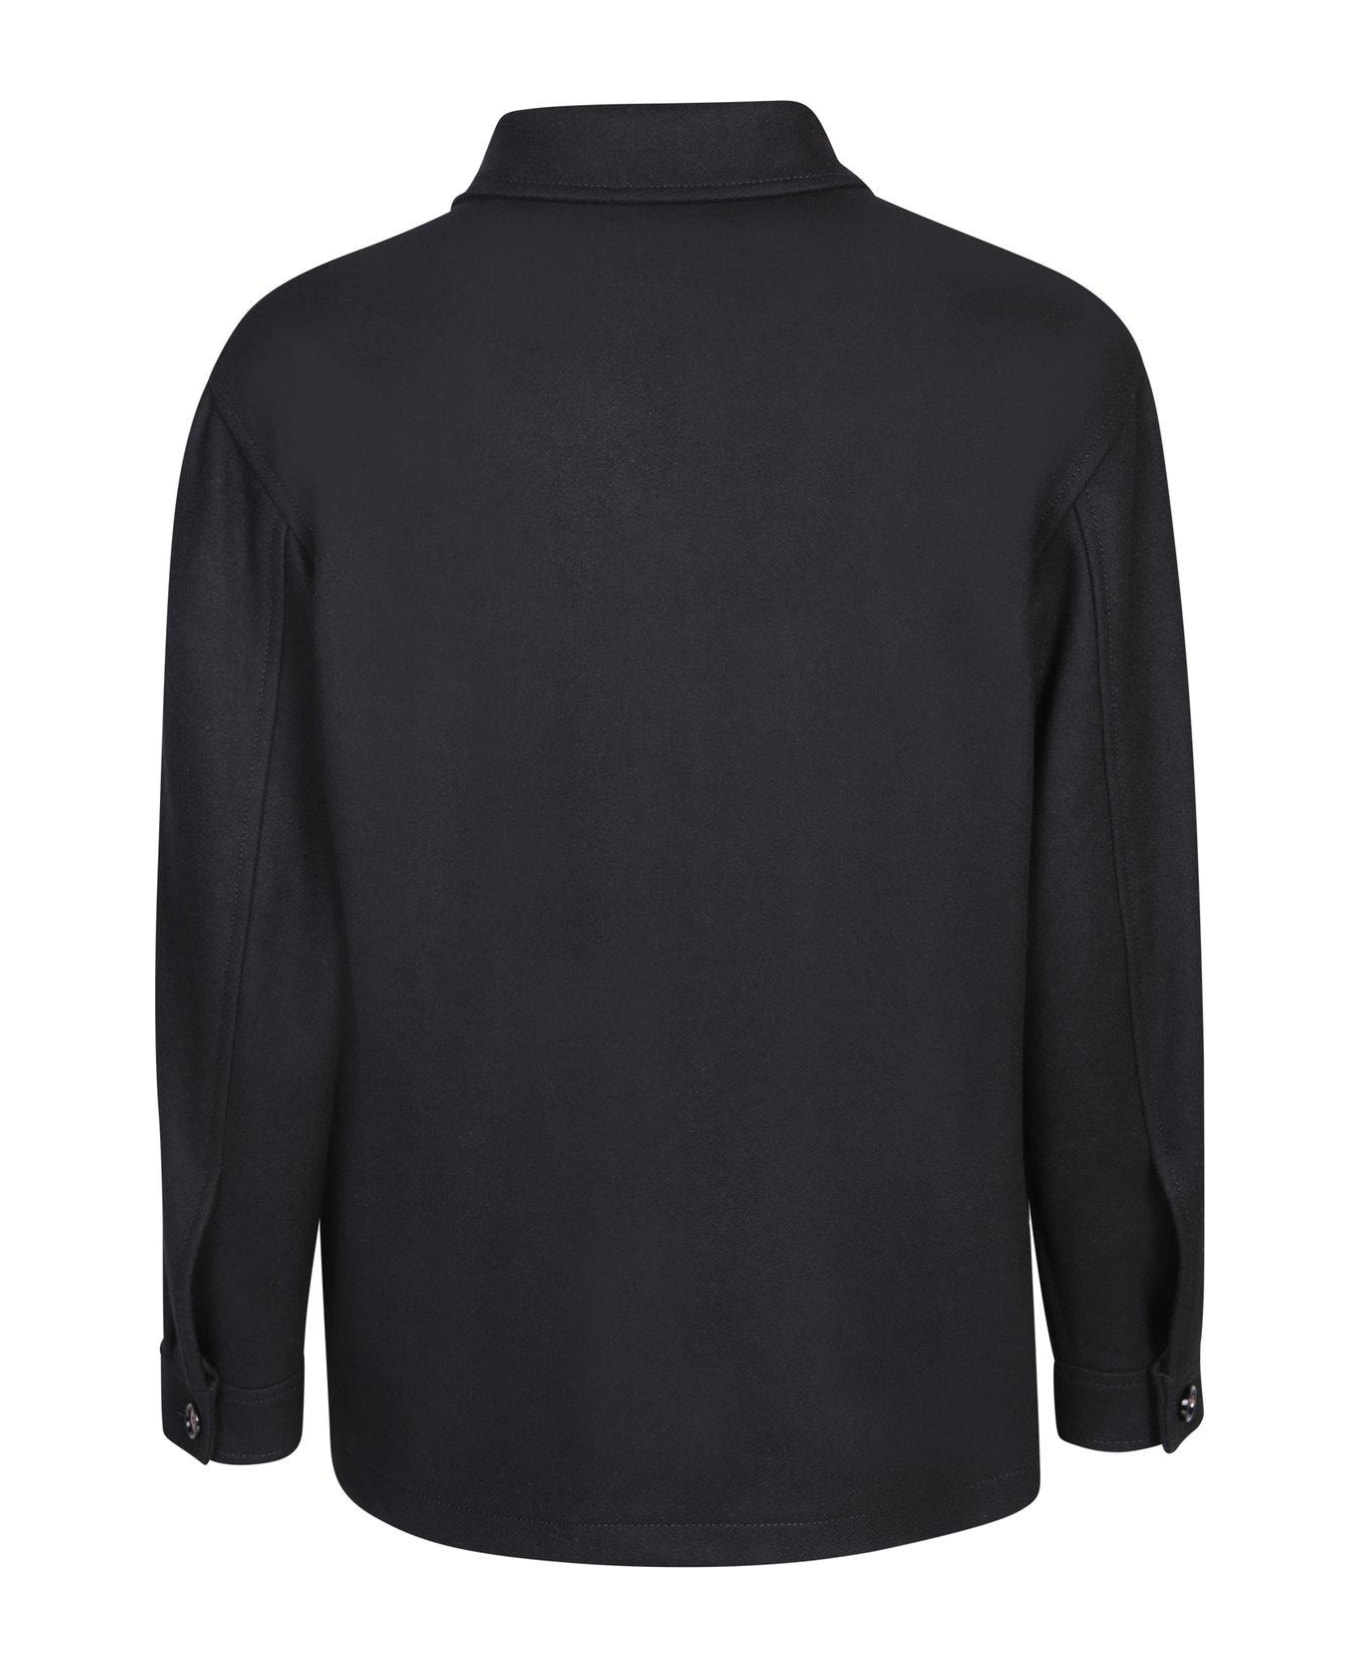 Tagliatore Spread-collared Buttoned Shirt Jacket - Black